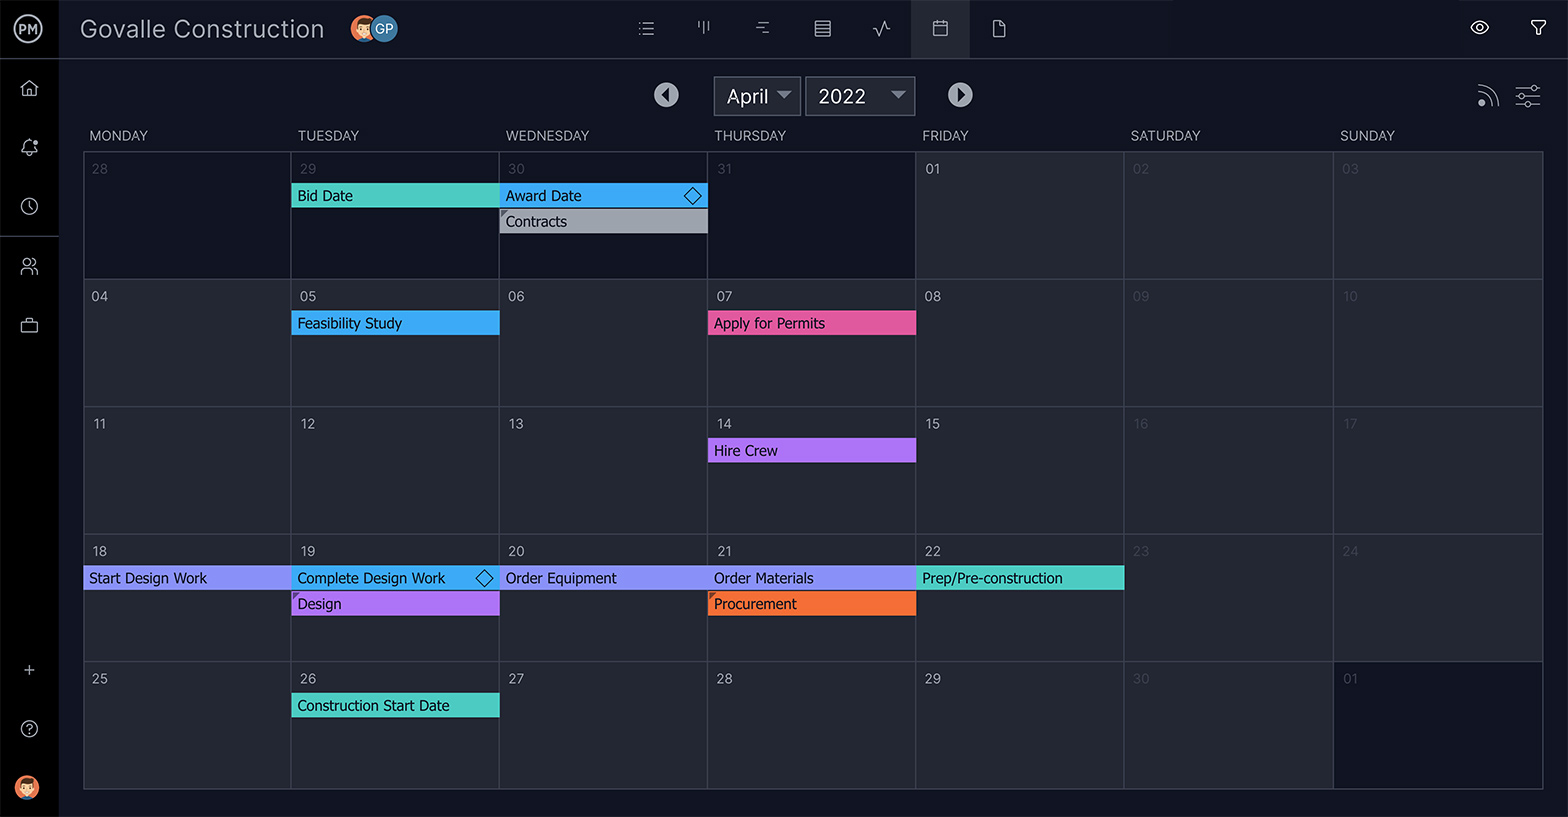 ProjectManager's calendar view